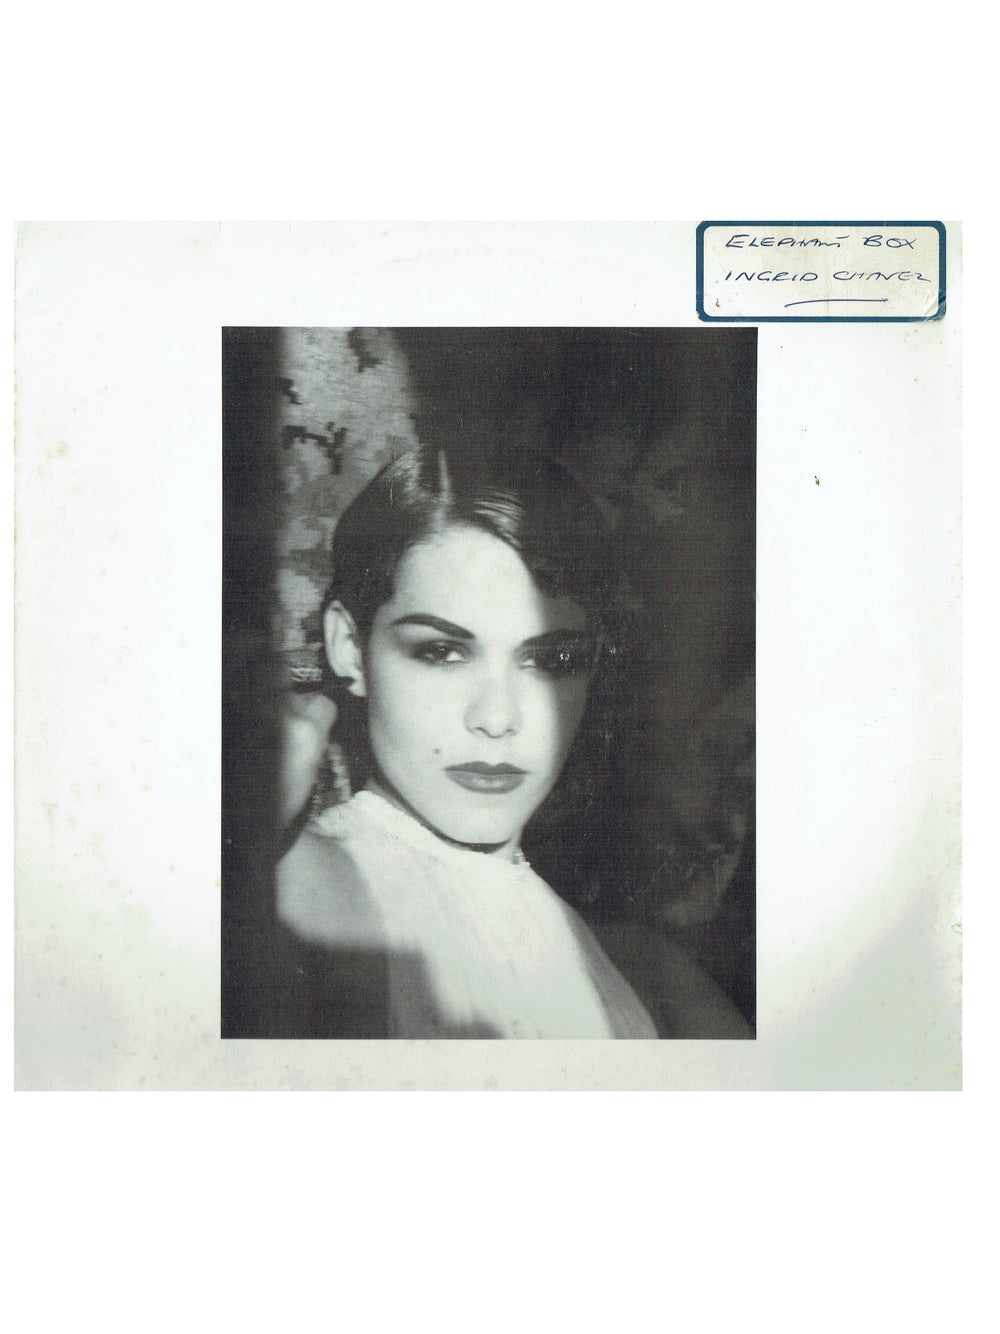 Prince – Ingrid Chavez Elephant Box Vinyl 12" White Label EU Preloved:1991